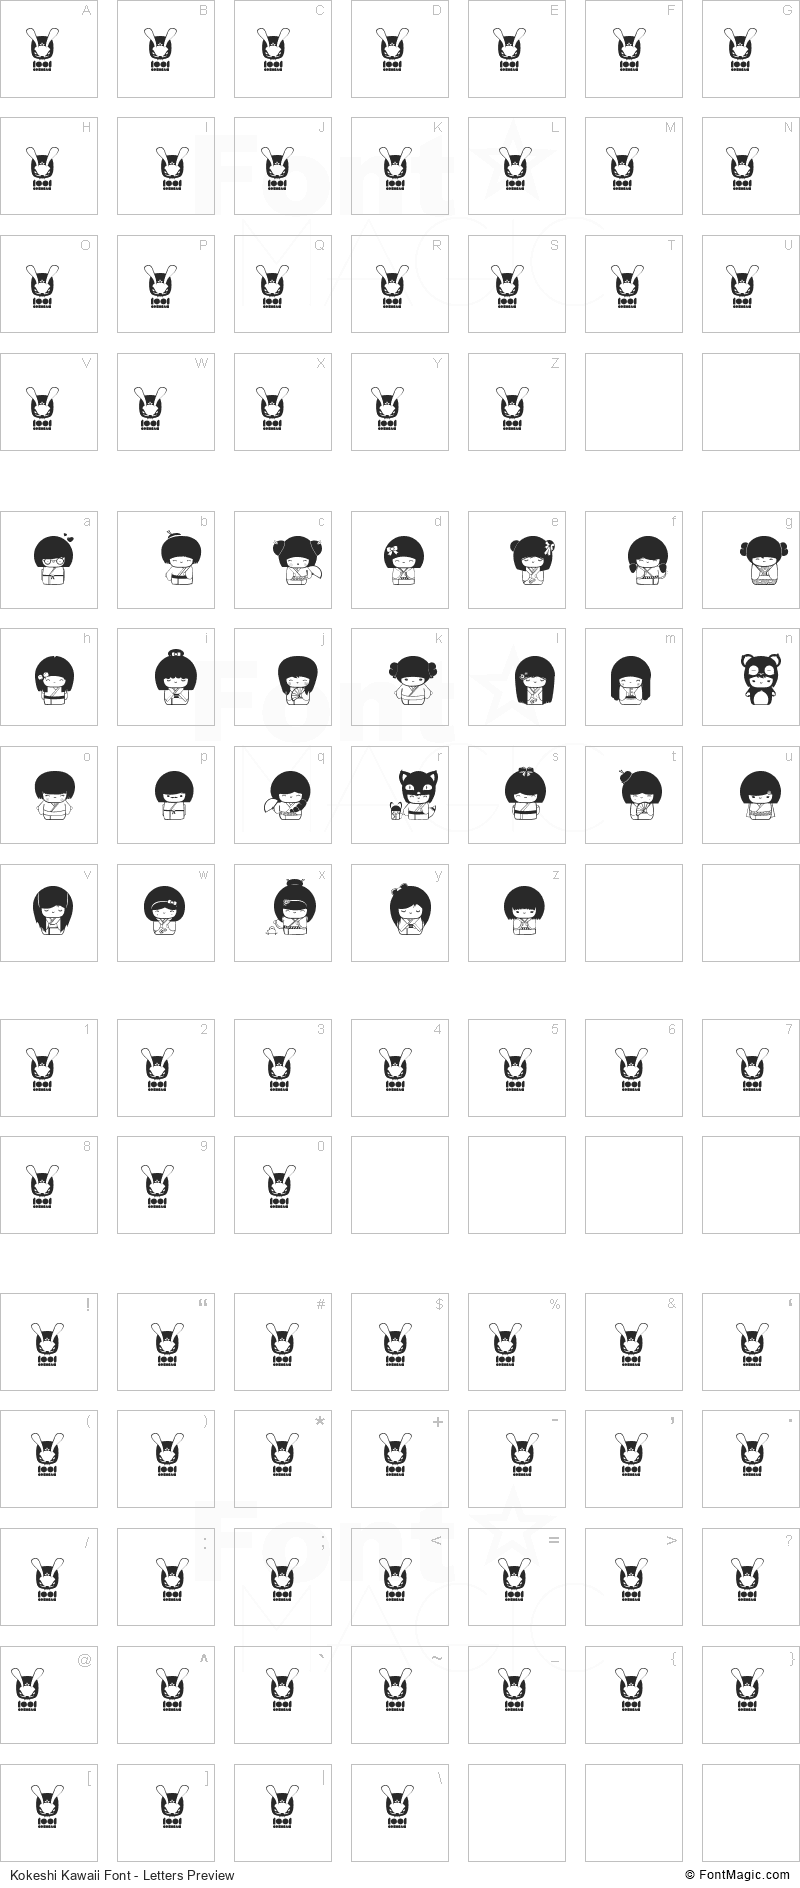 Kokeshi Kawaii Font - All Latters Preview Chart